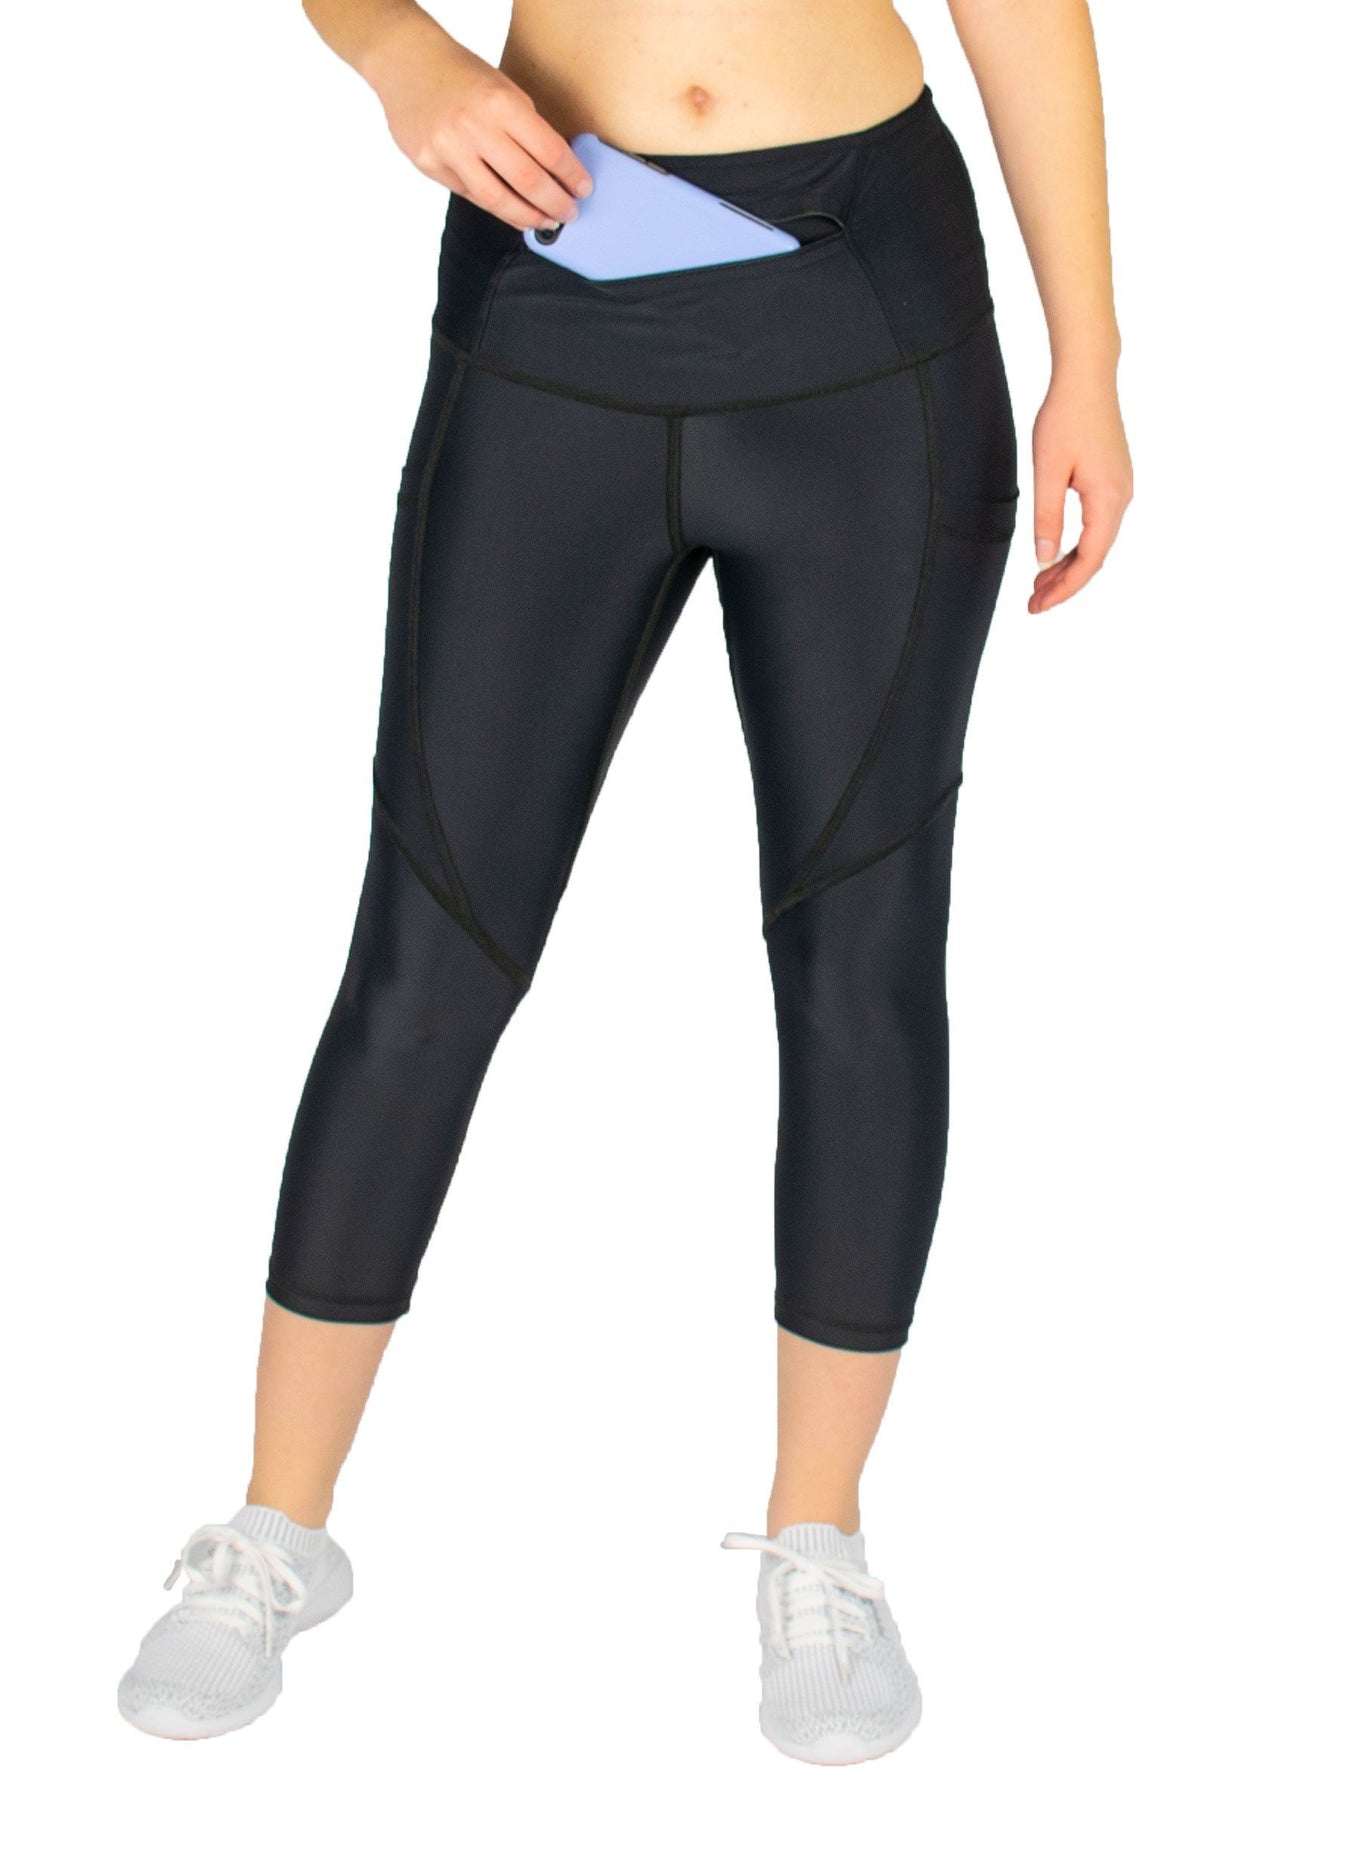 GoBOLD Capris | Women's Athletic Bottoms | BOLDER Athletic Wear ...